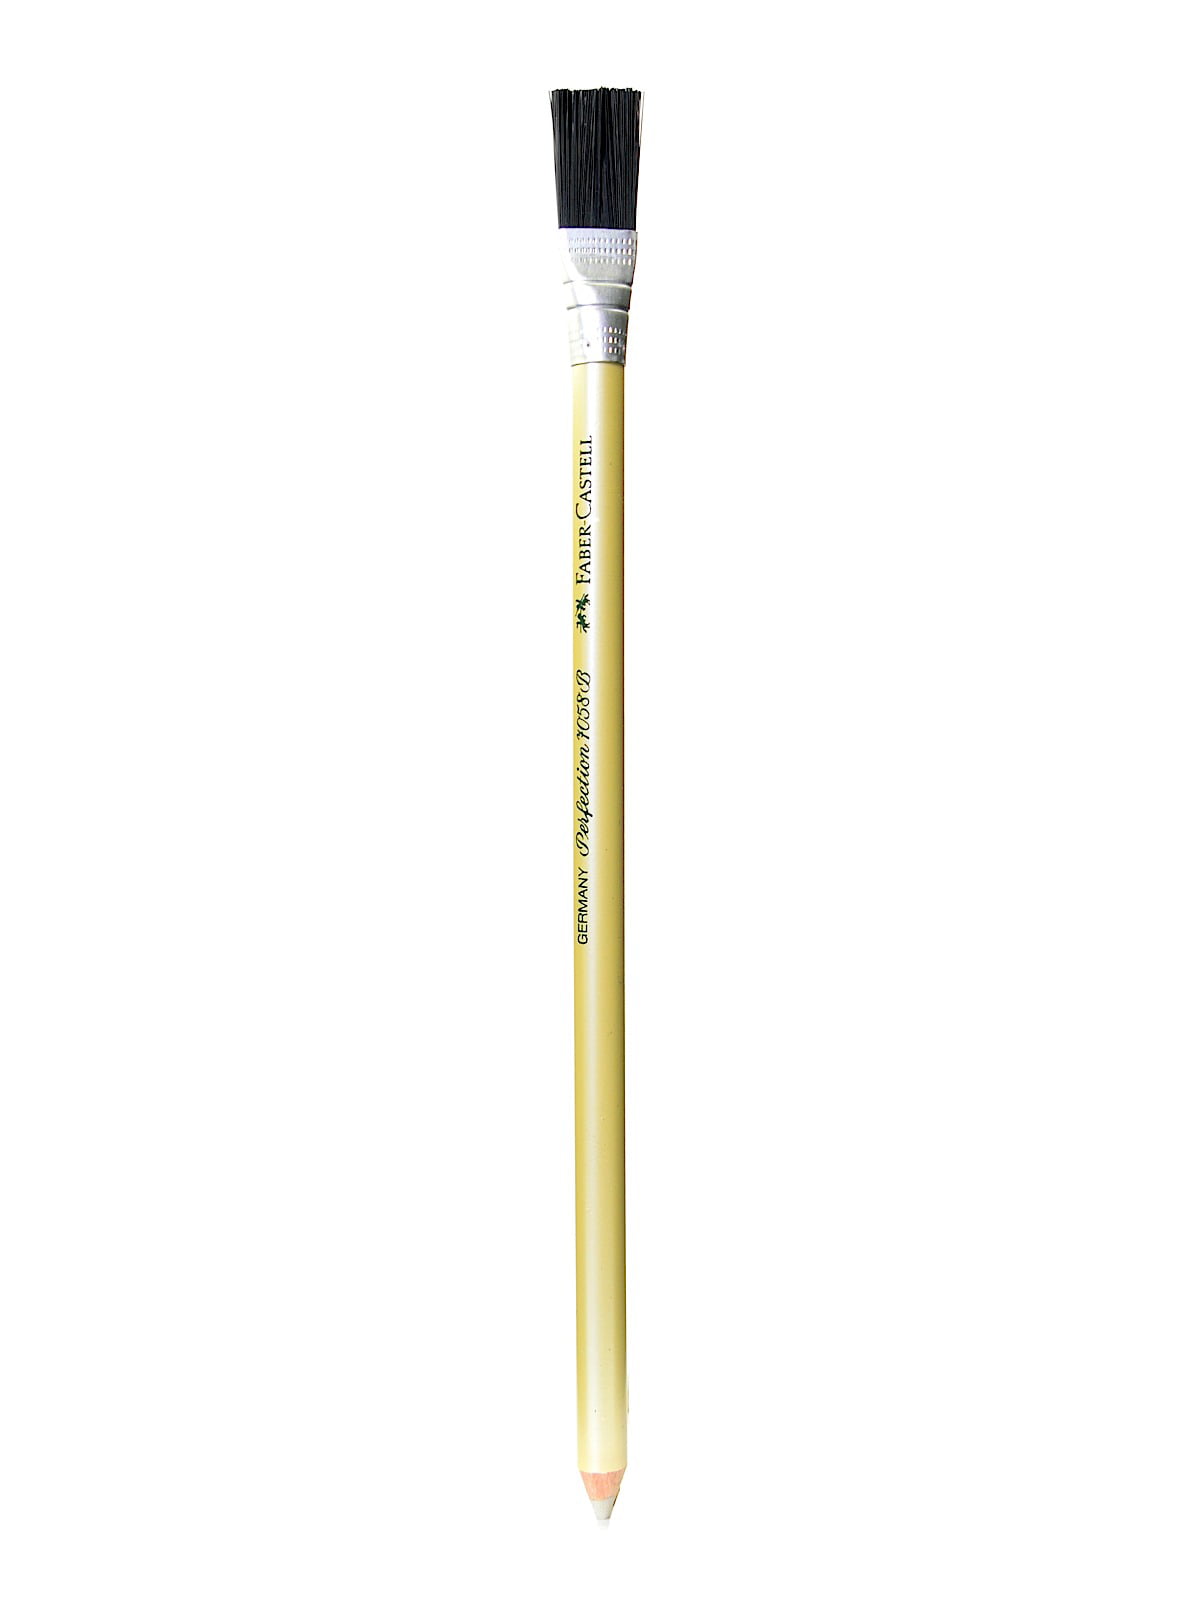 Perfection 7058 B eraser pencil